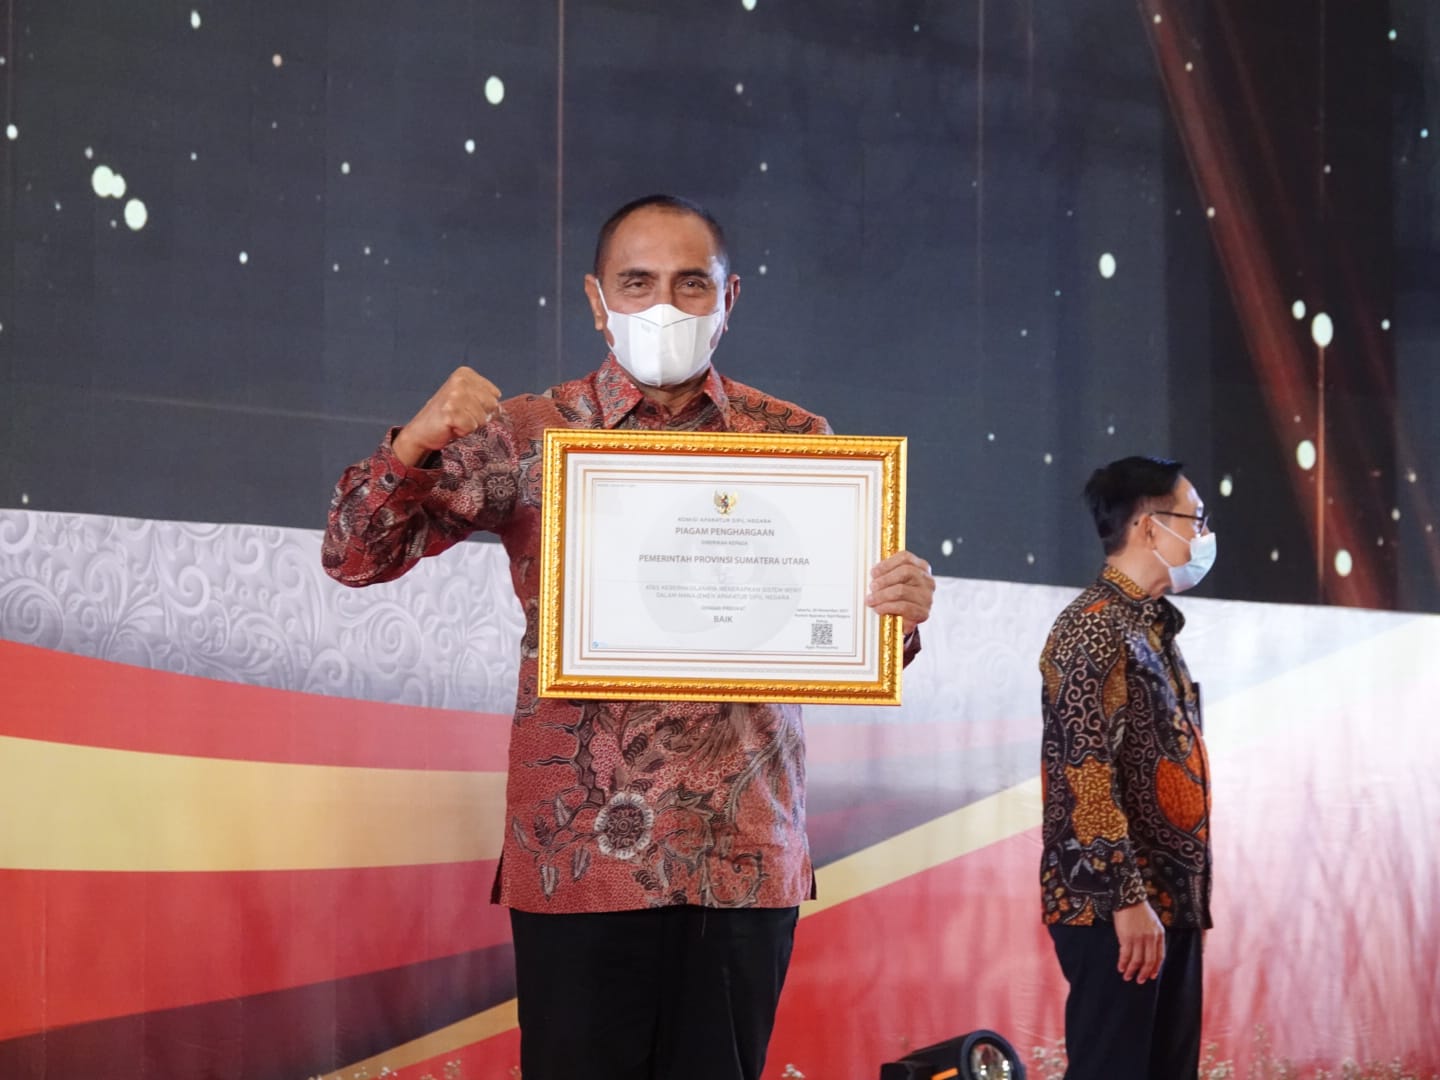 Provinsi Sumatera Utara (Sumut) mendapat Anugerah Meritokrasi kategori baik dari Komisi Aparatur Sipil Negara (KASN) terkait penerapan sistem Merit bagi Aparatur Sipil Negara (ASN). Piagam penghargaan diterima langsung Gubernur Sumut Edy Rahmayadi di Hotel Westin Surabaya, Selasa (7/12).